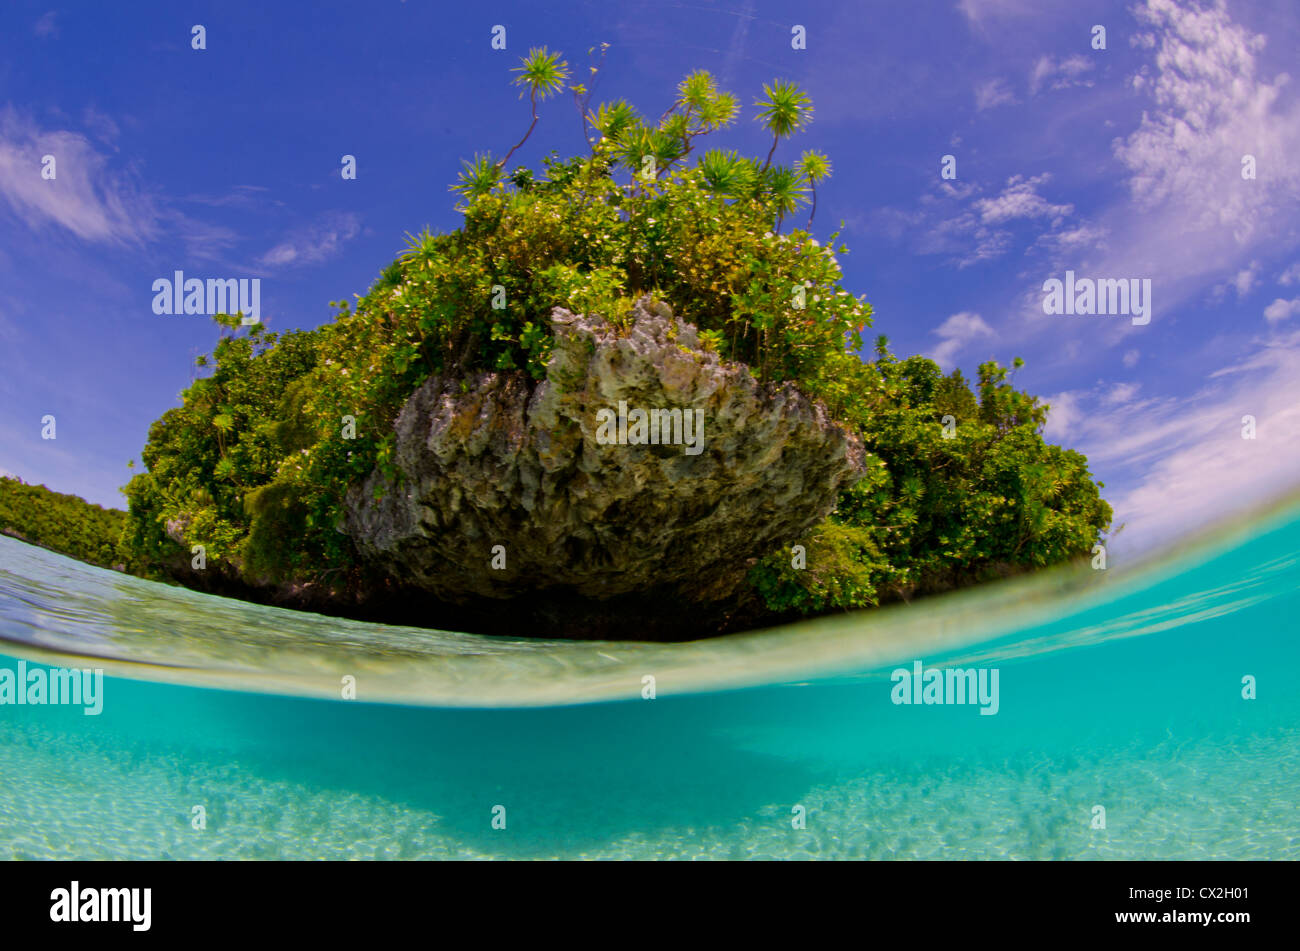 Escena subacuática de Palau, arrecifes de coral, dividir, fotosub, agua azul, agua clara, isla, isla tropical, paraíso, snorkel, mar Foto de stock